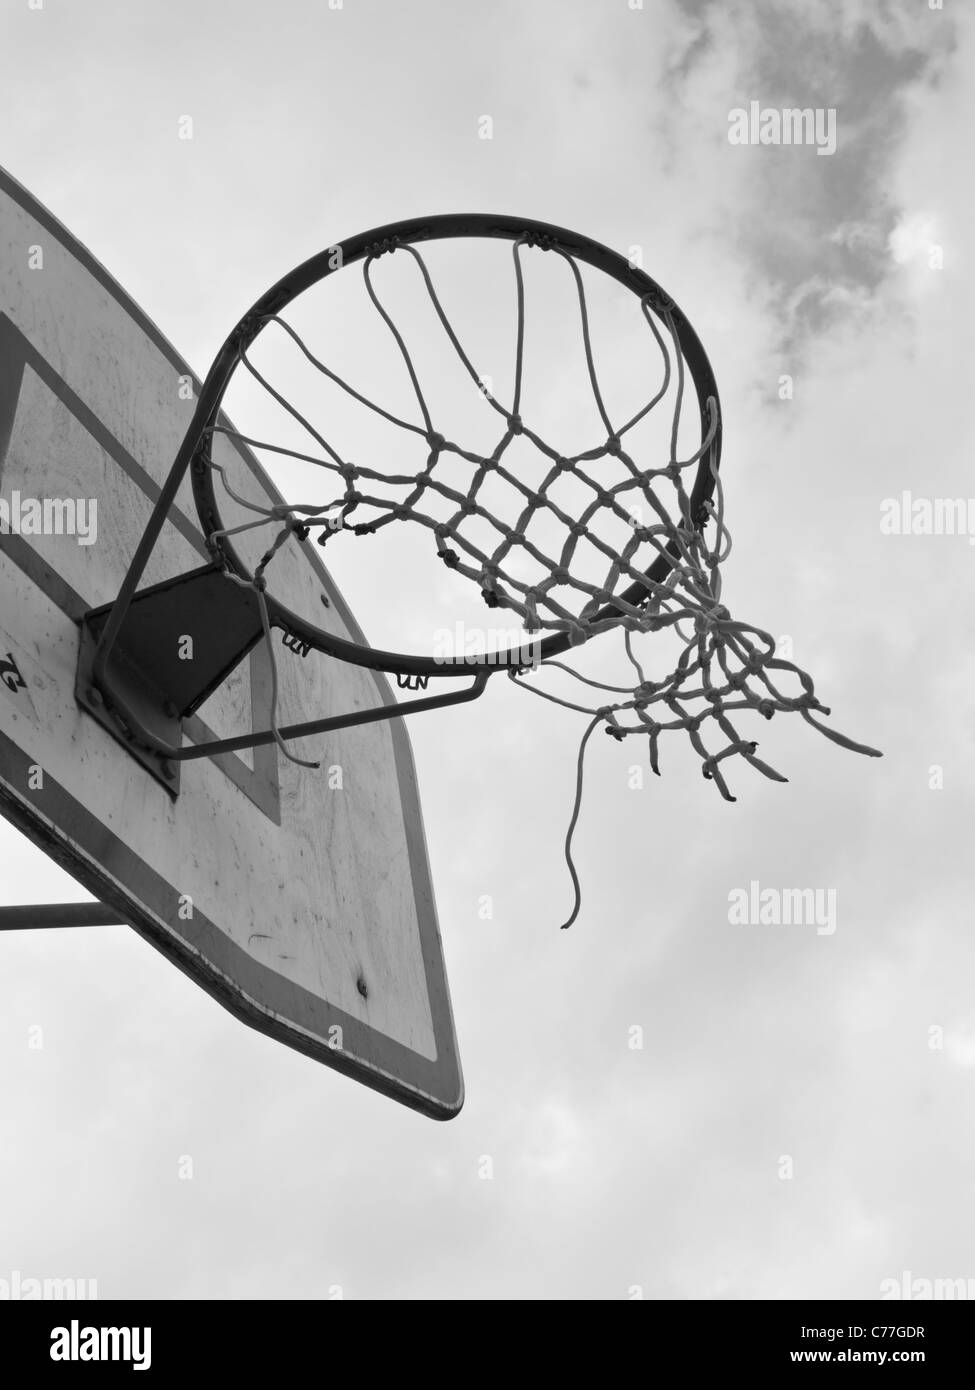 Basketball basket with broken net Stock Photo - Alamy